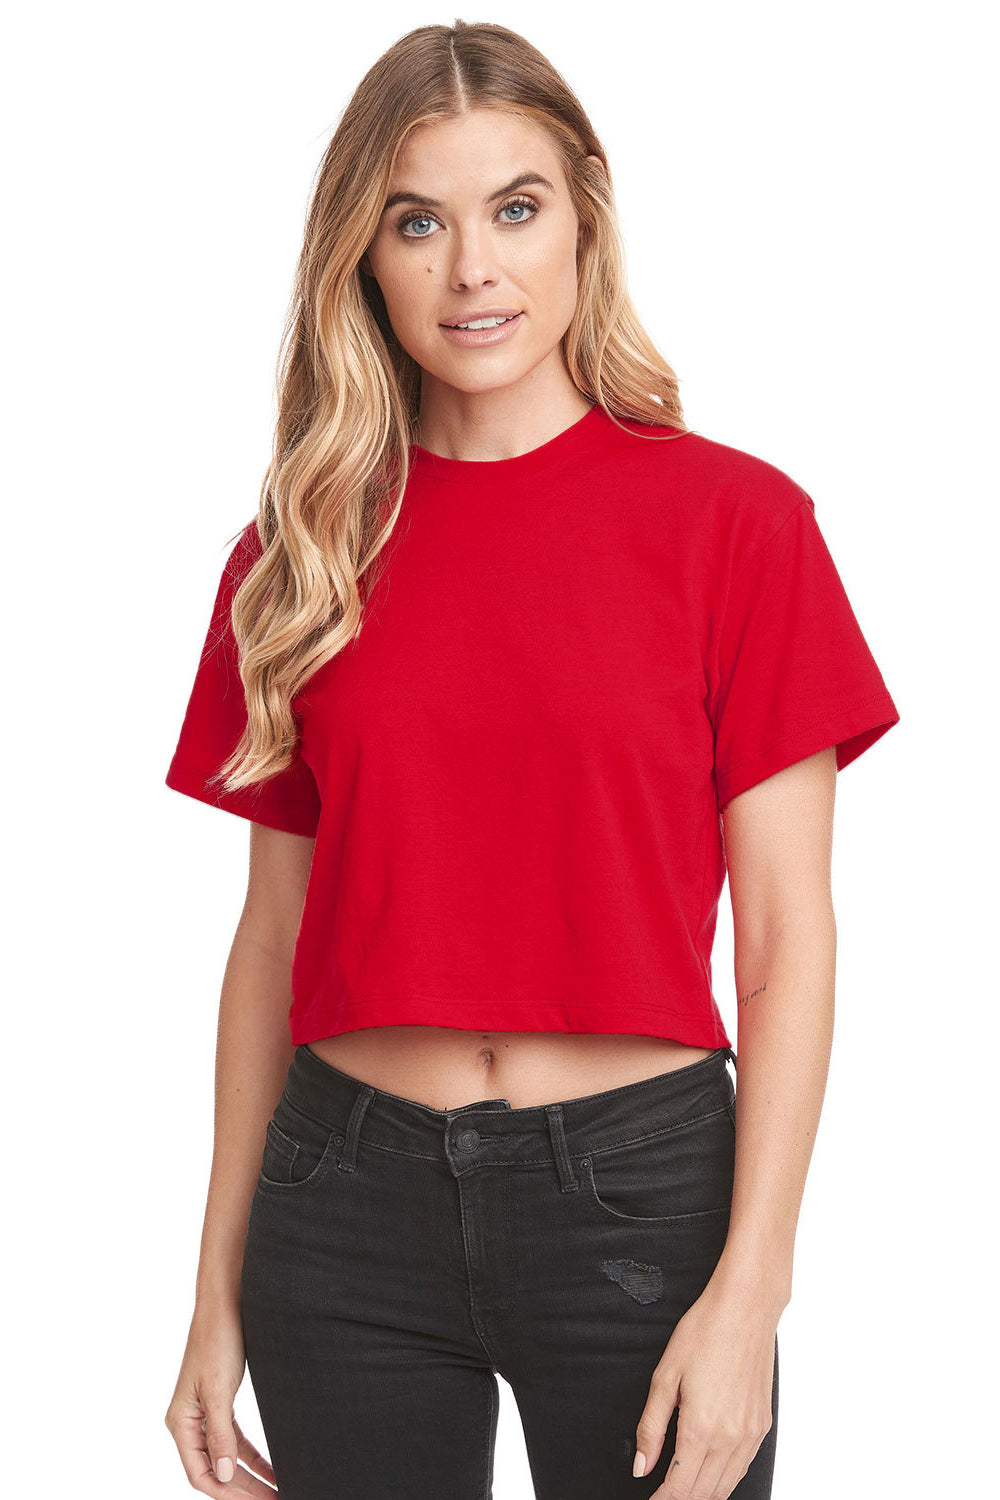 Next Level 1580NL Womens Ideal Crop Short Sleeve Crewneck T-Shirt Red Front